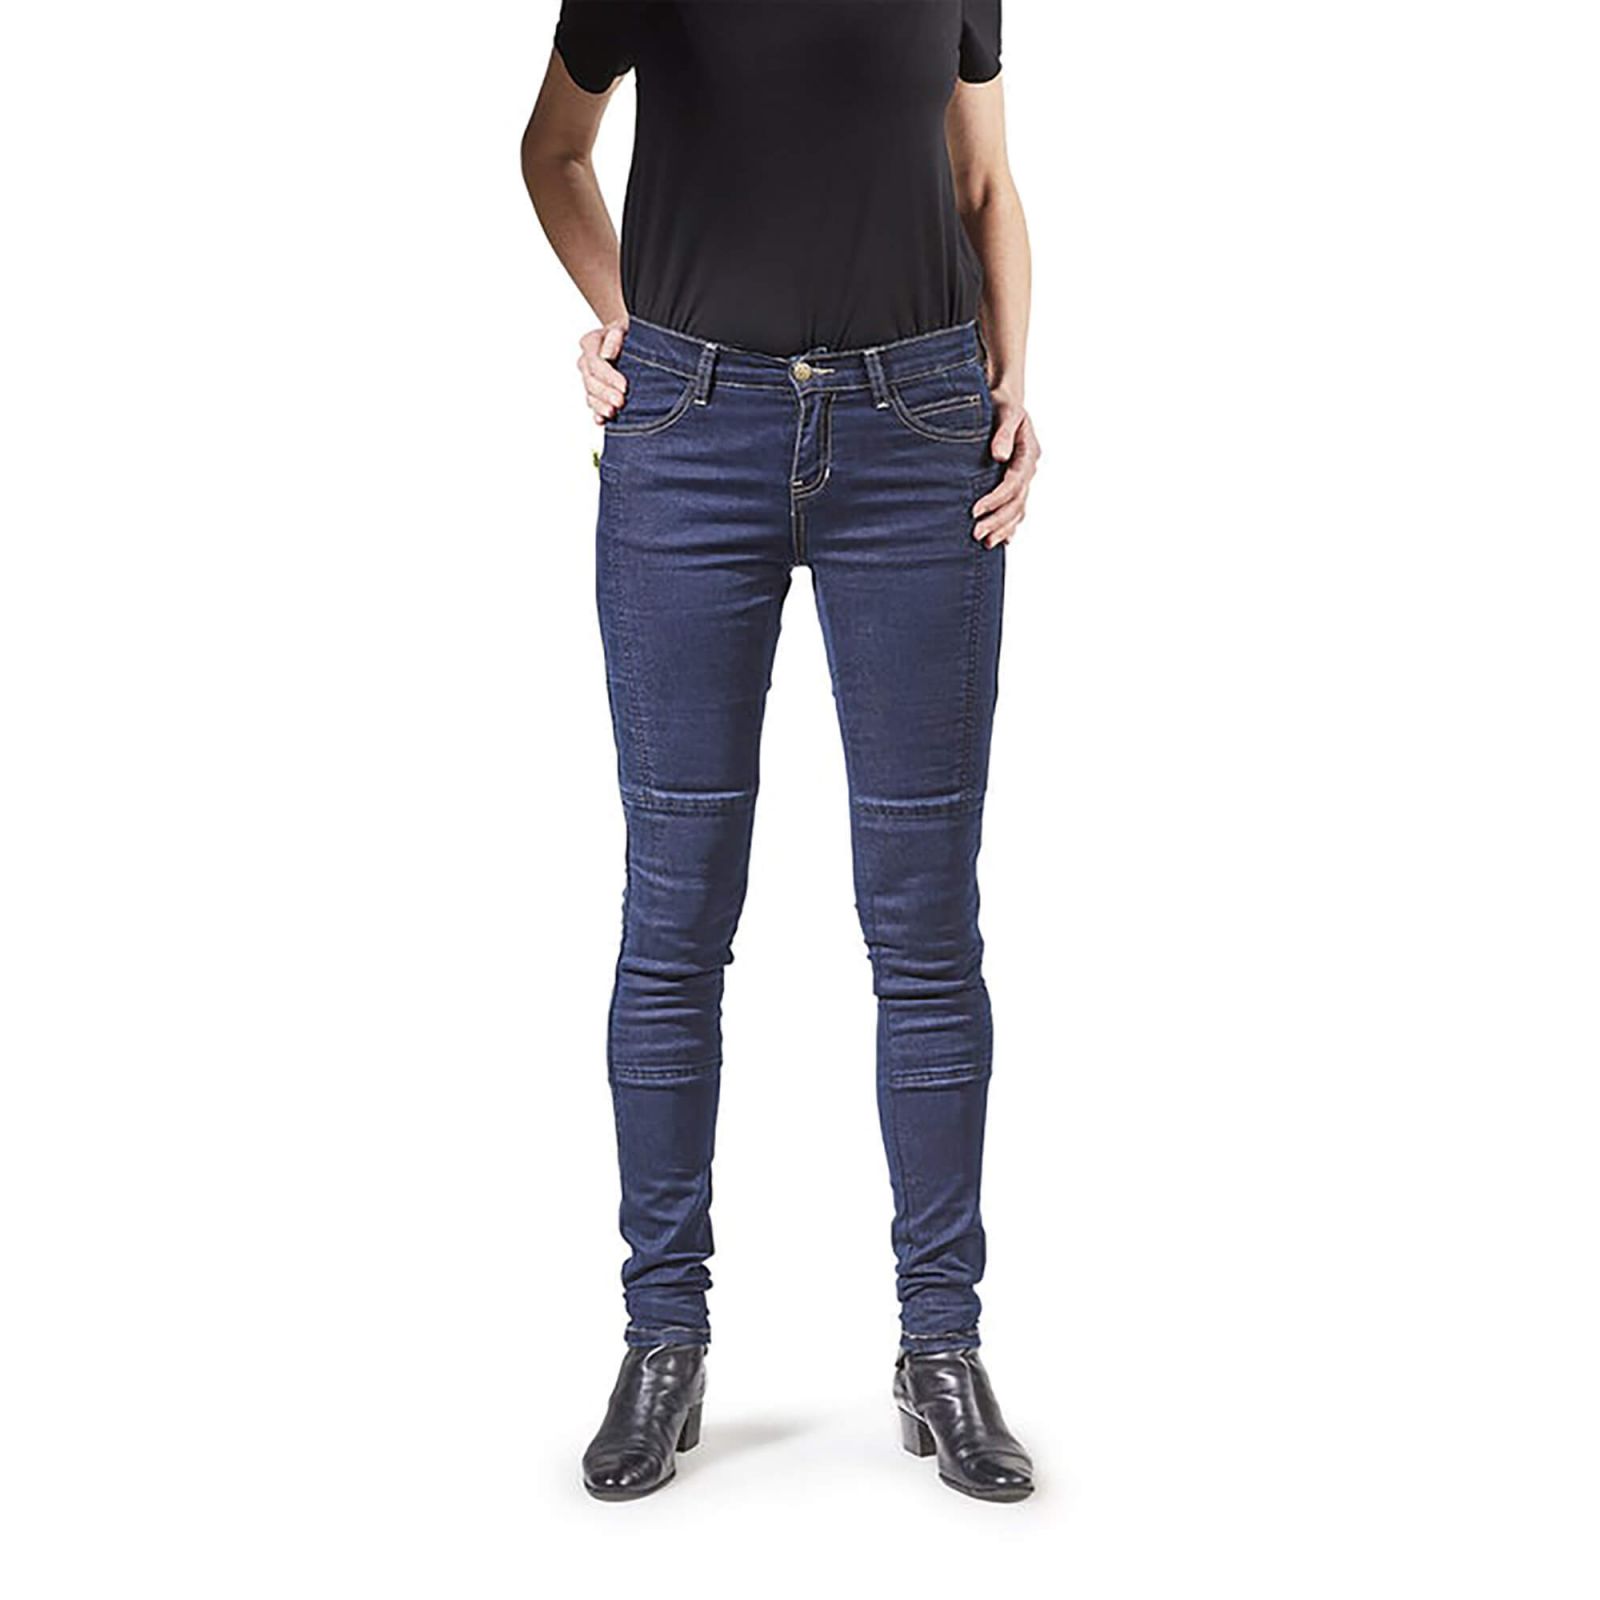 https://www.ridersline.com.au/shop/3640-atmn_large_2x/draggin-jeans-superleggera-womens.jpg